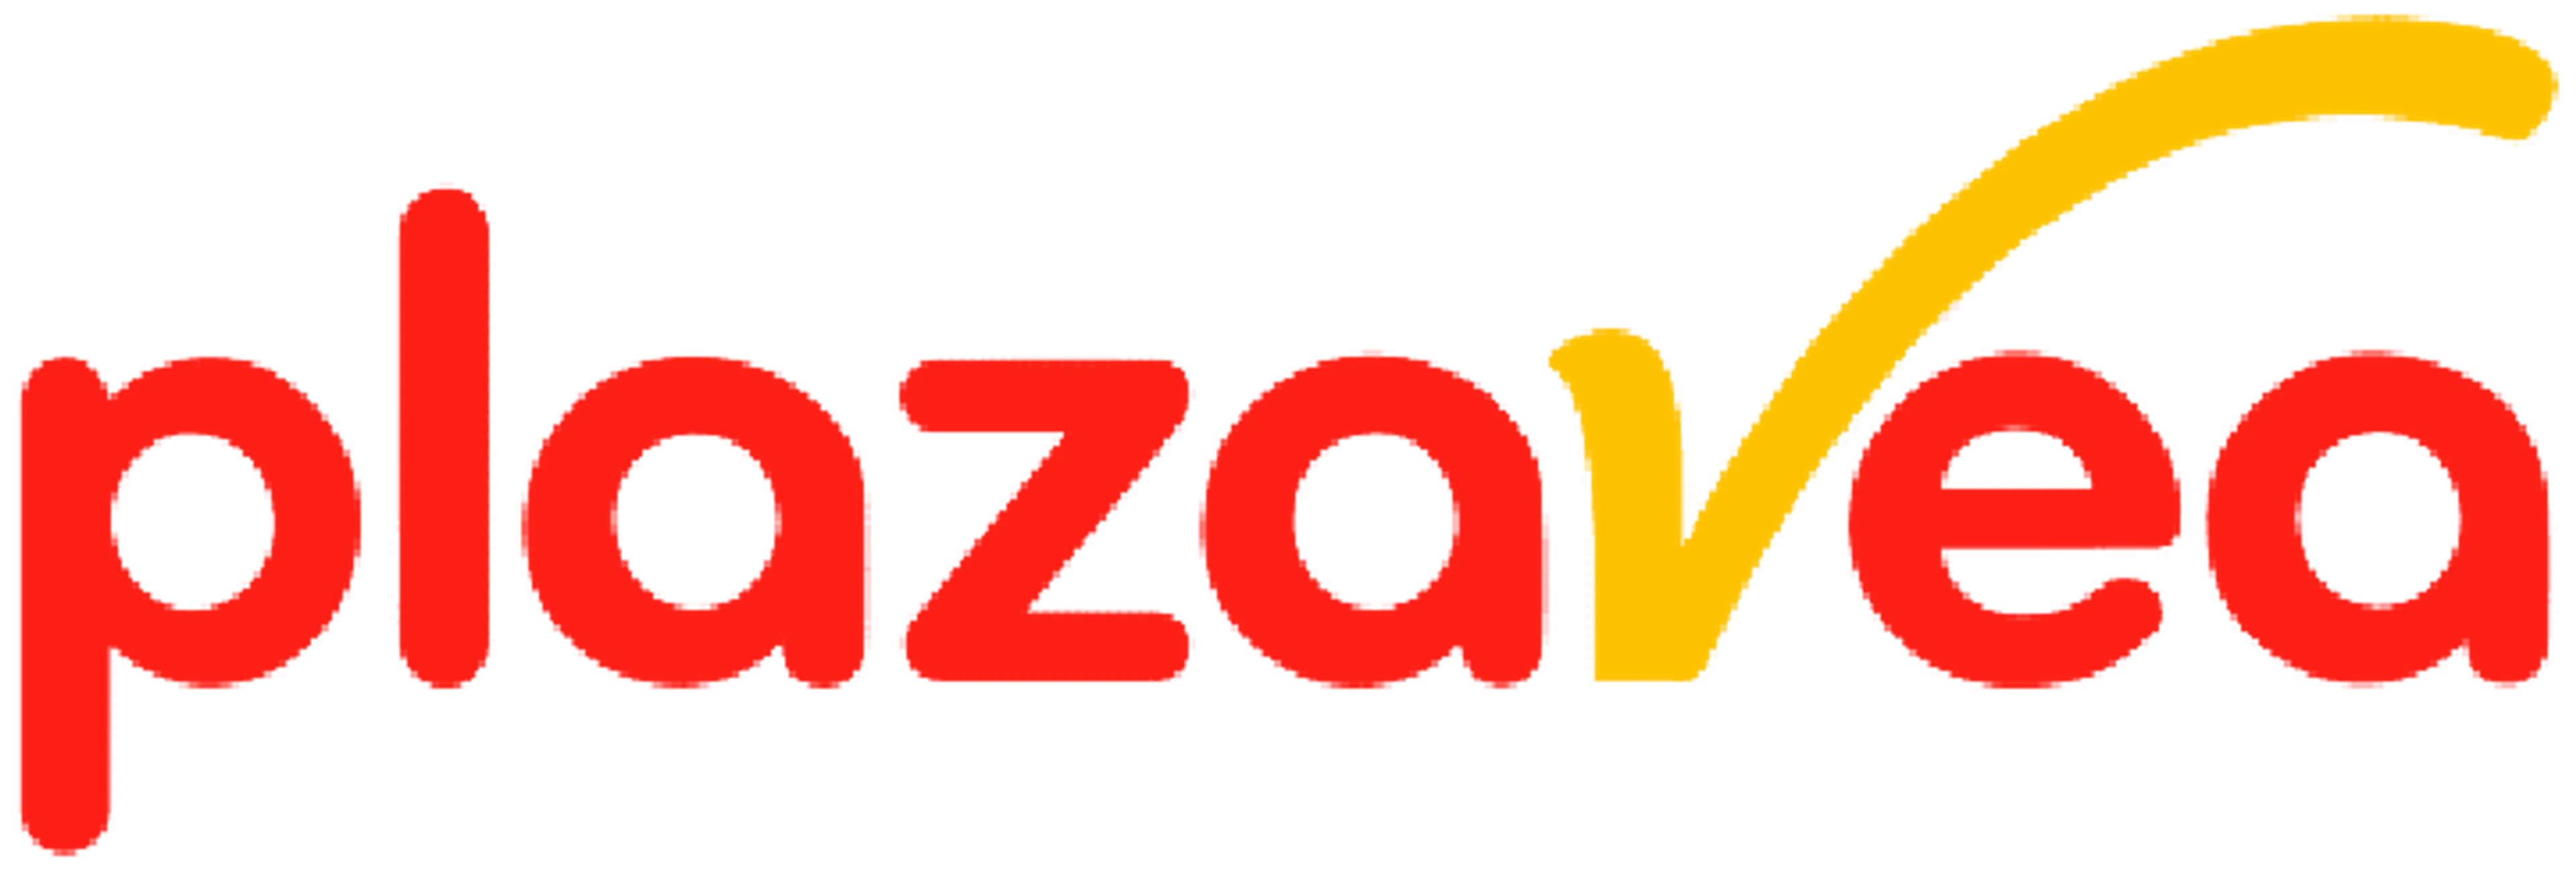 PLAZA VEA logo